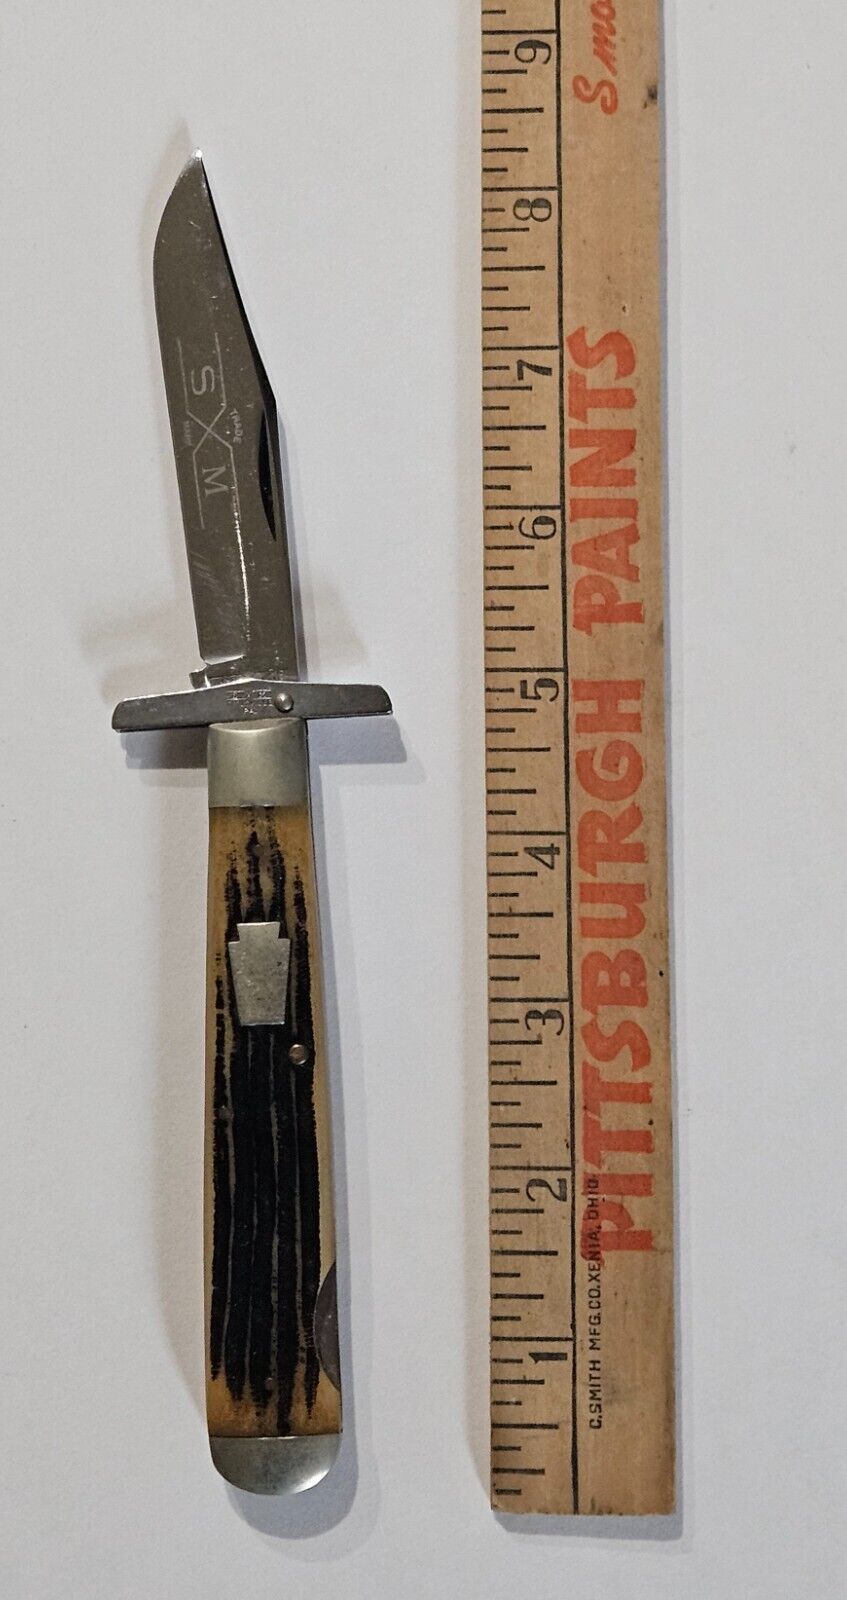 Schatt and Morgan knife 061 81L made in U.S.A.